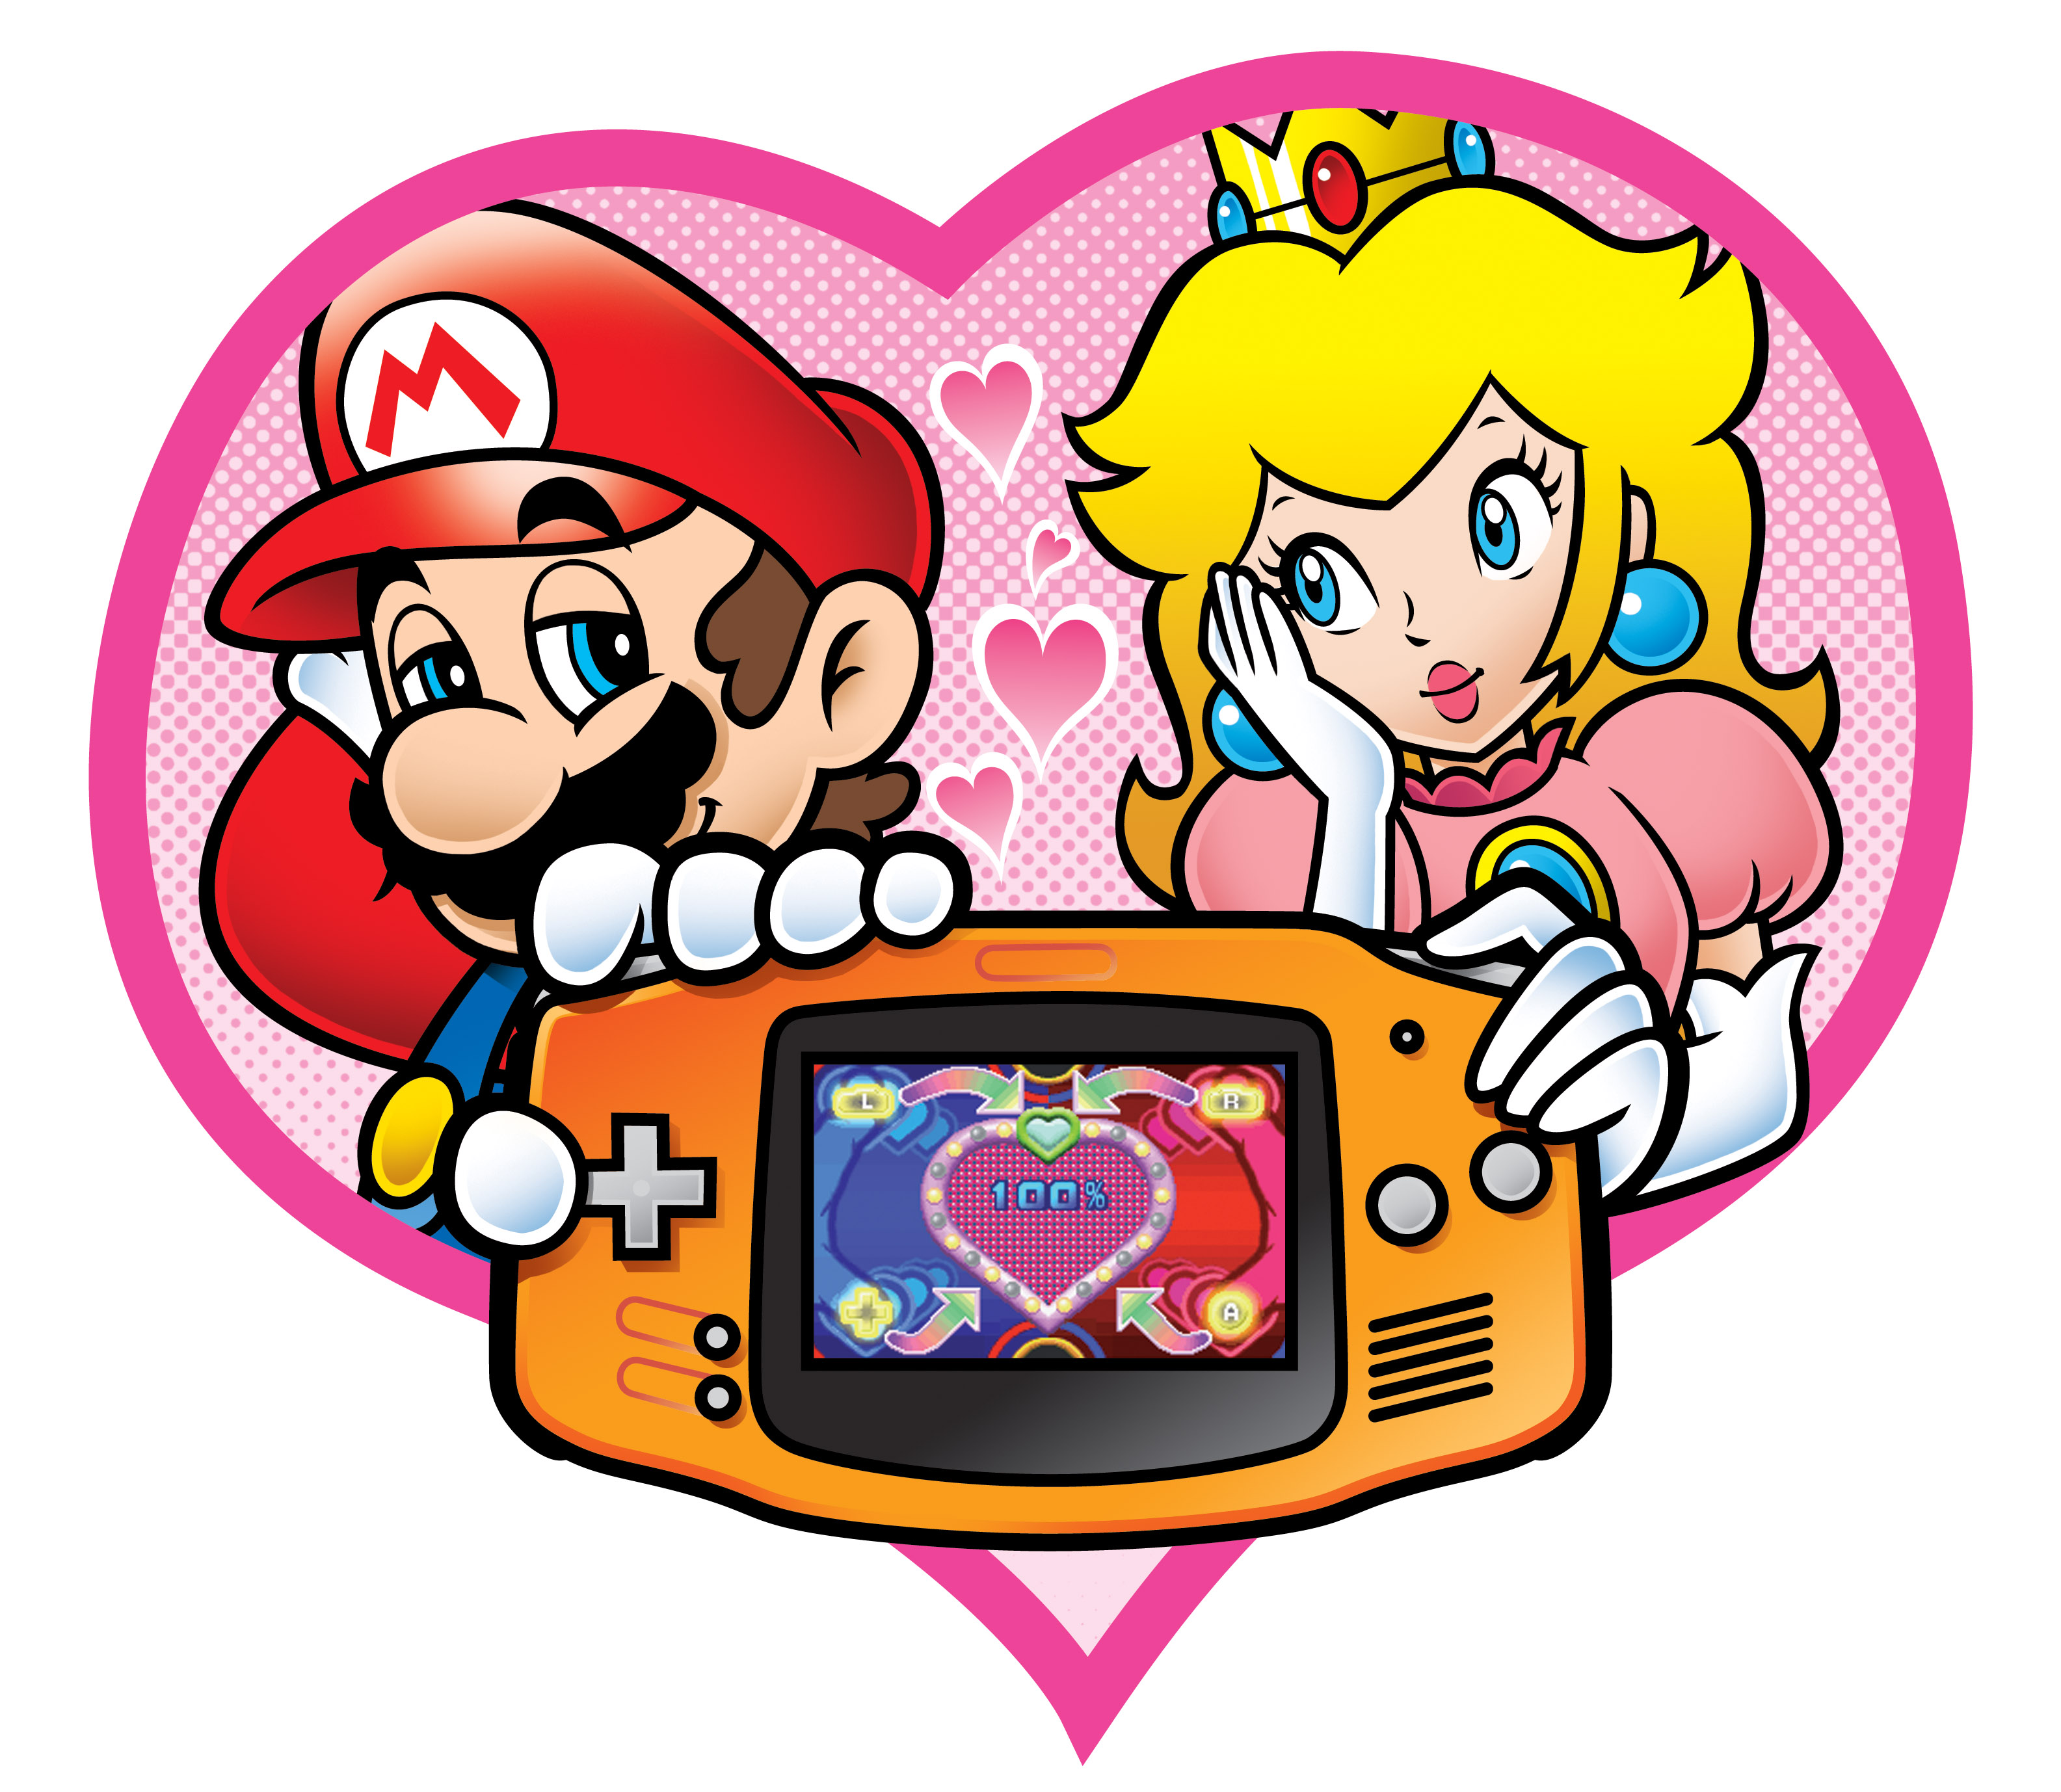 General 3169x2756 Mario Princess Peach GameBoy Advance romance video games Nintendo Game Boy Nintendo